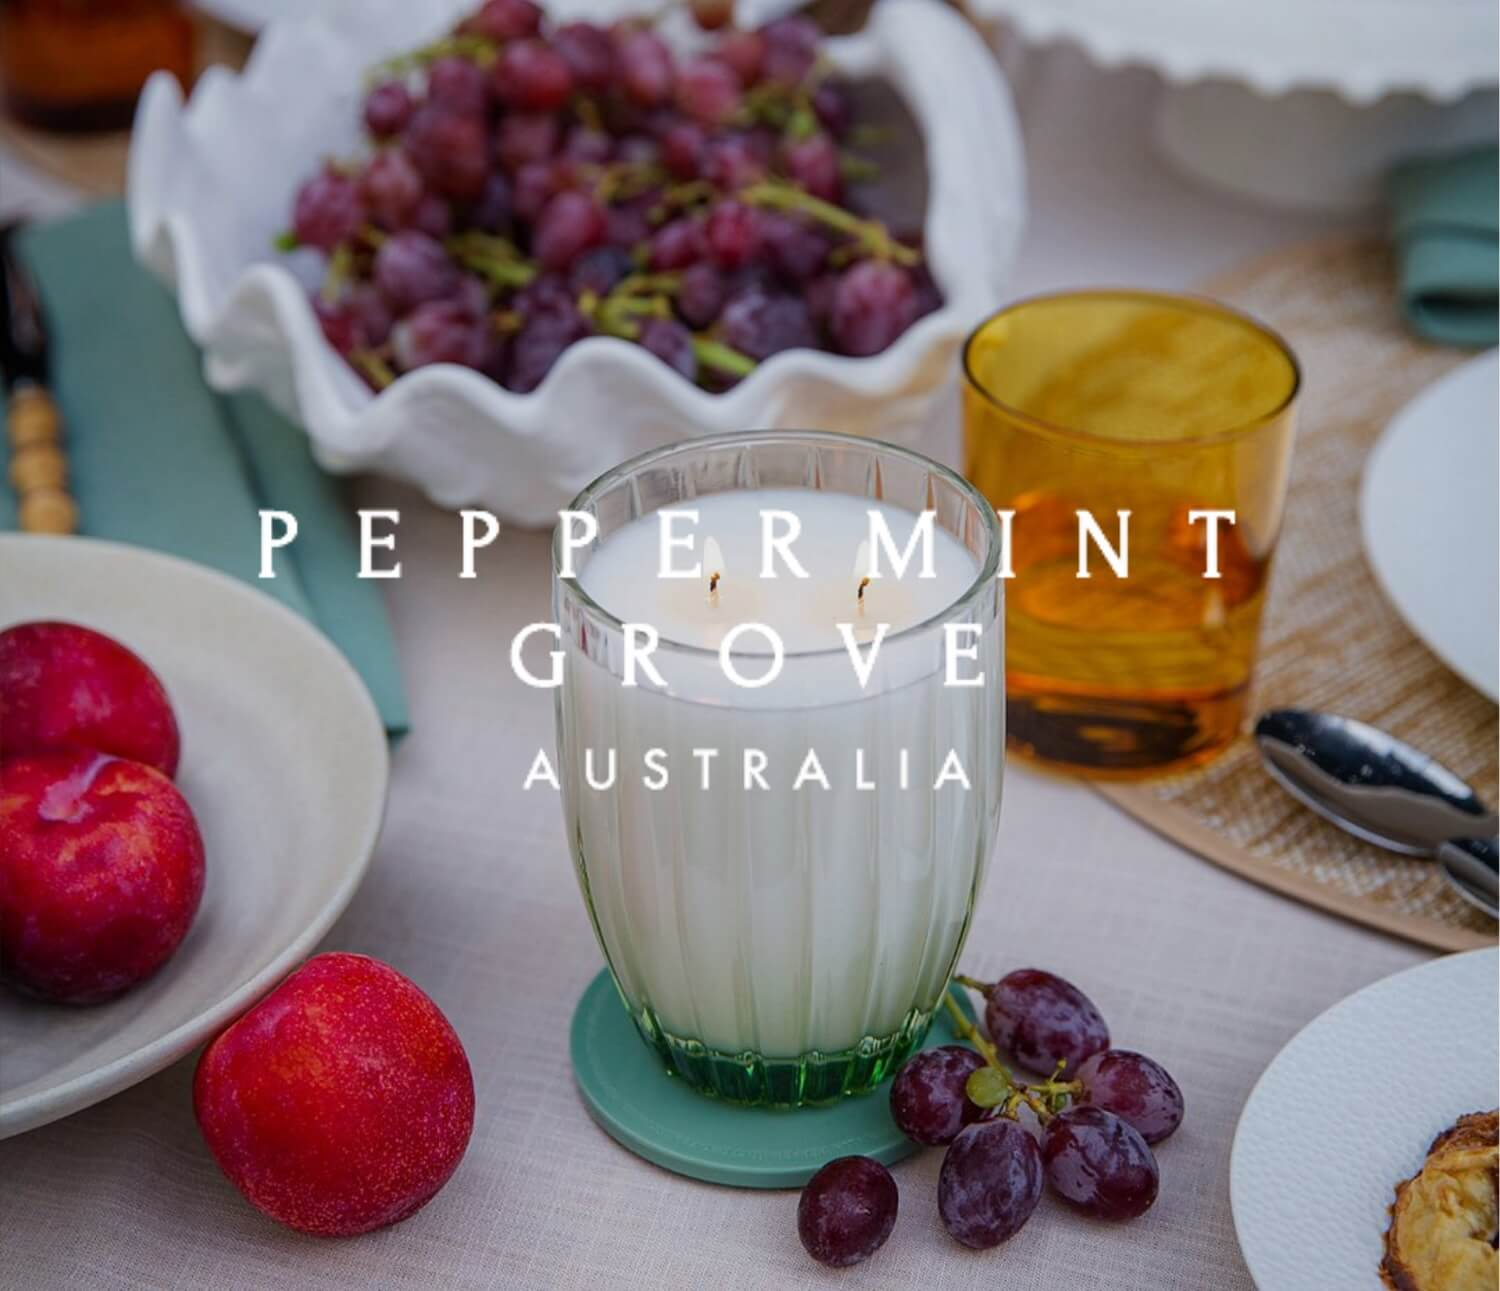 Peppermint Grove Australia